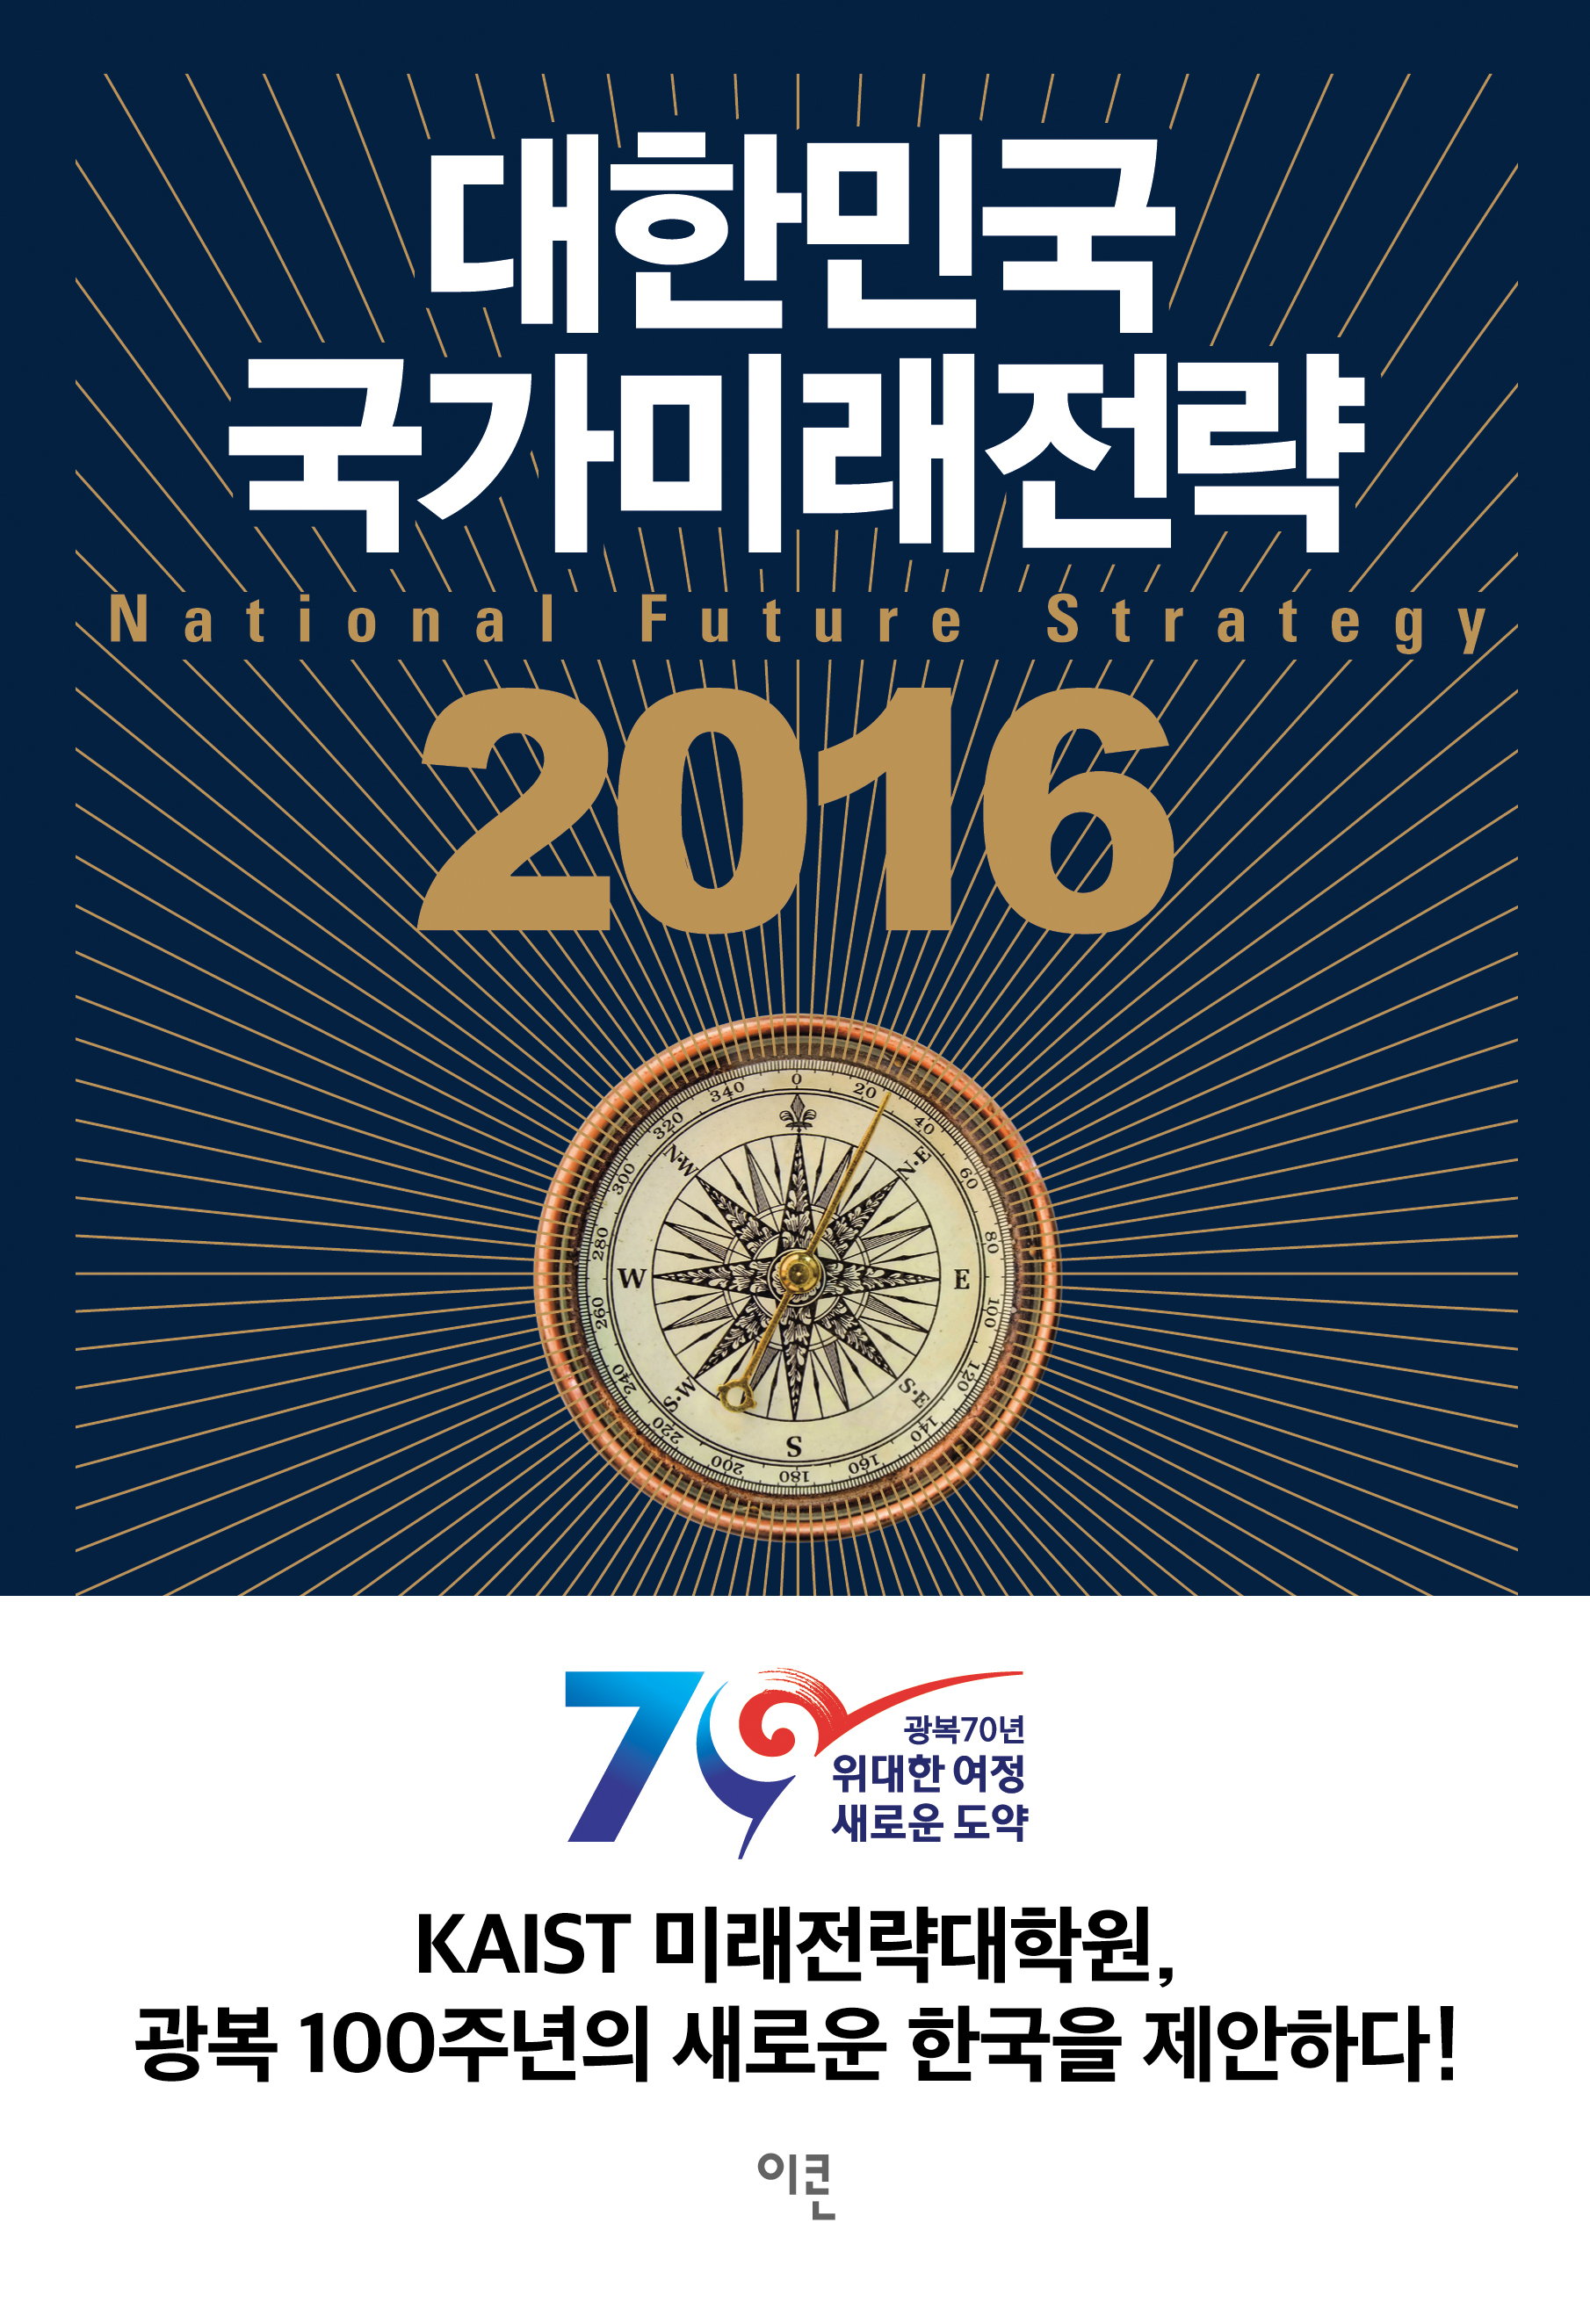 Korea National Future Strategy 2016